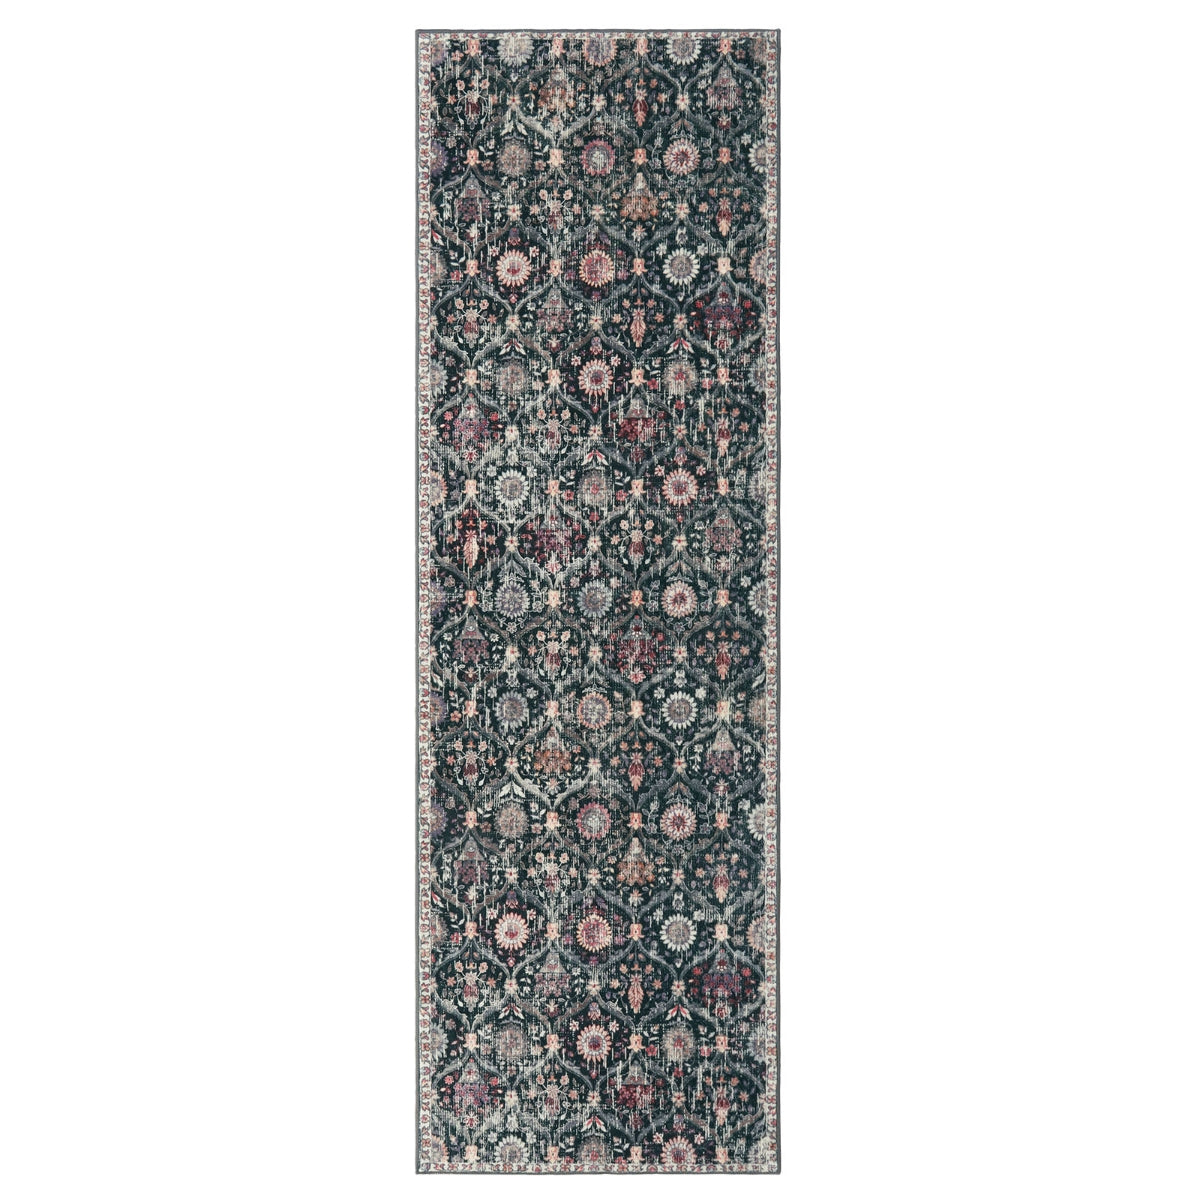 Ultra-thin Transitional Vintage Floral Moroccan Trellis Black Rug